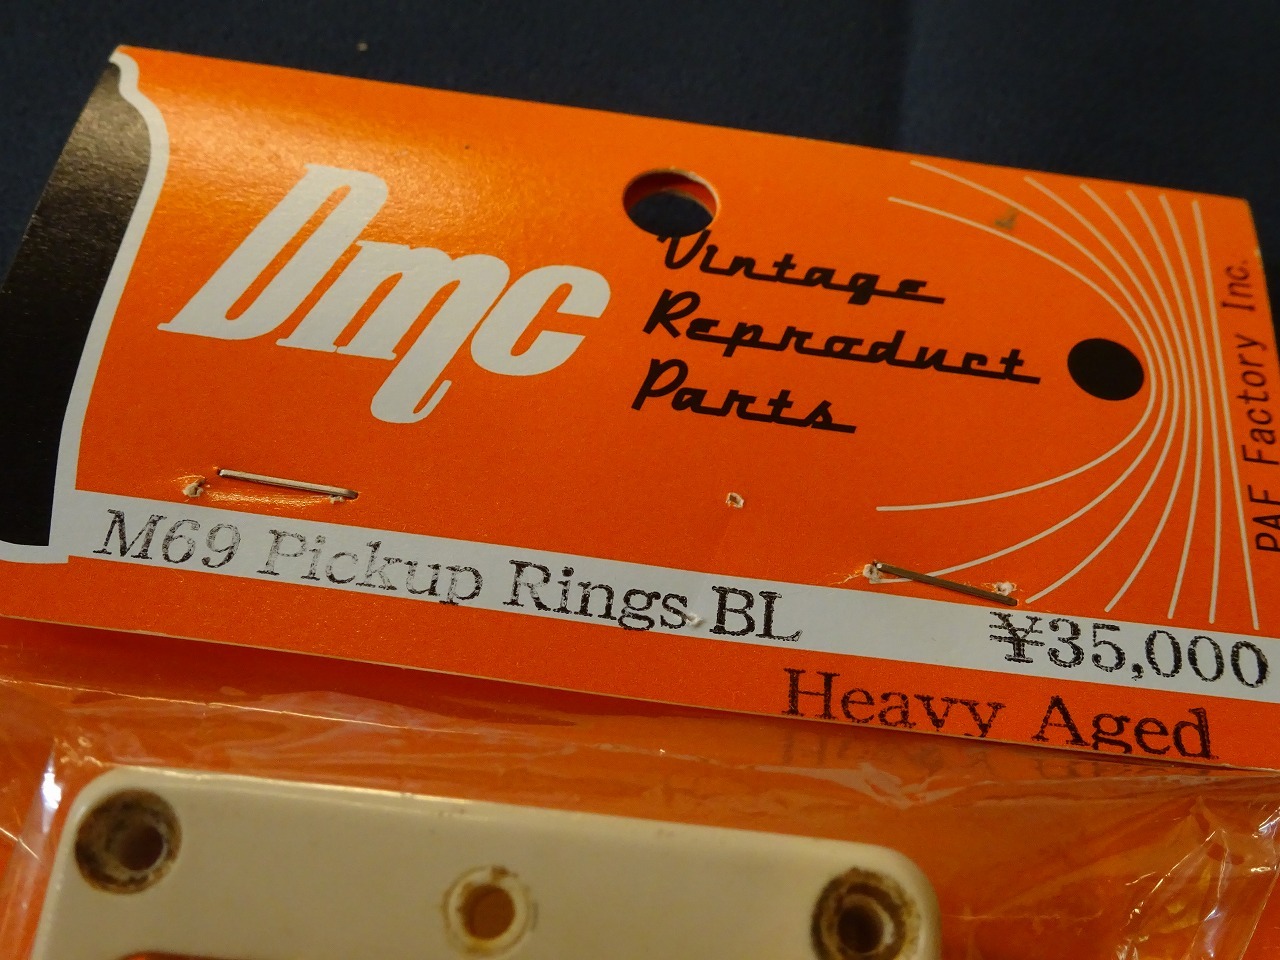 Dmc／M69 Pickup Rings BL Heavy Aged-